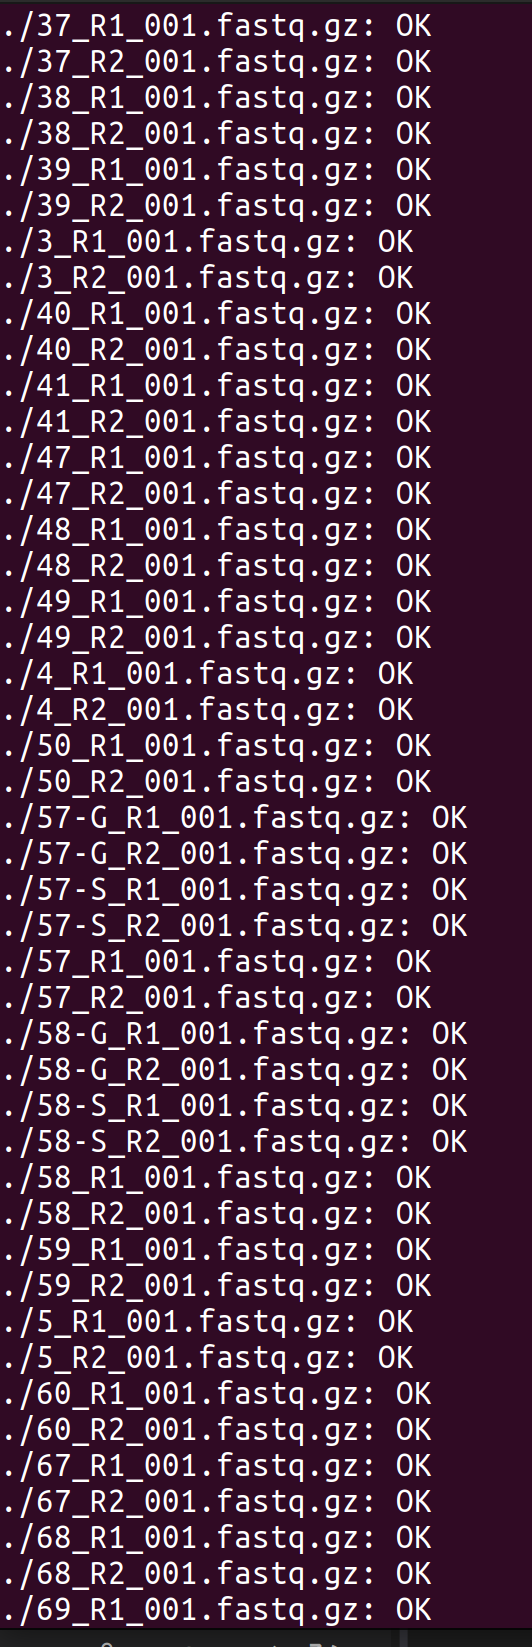 Screenshot showing MD5 checksum verification of FastQ files.